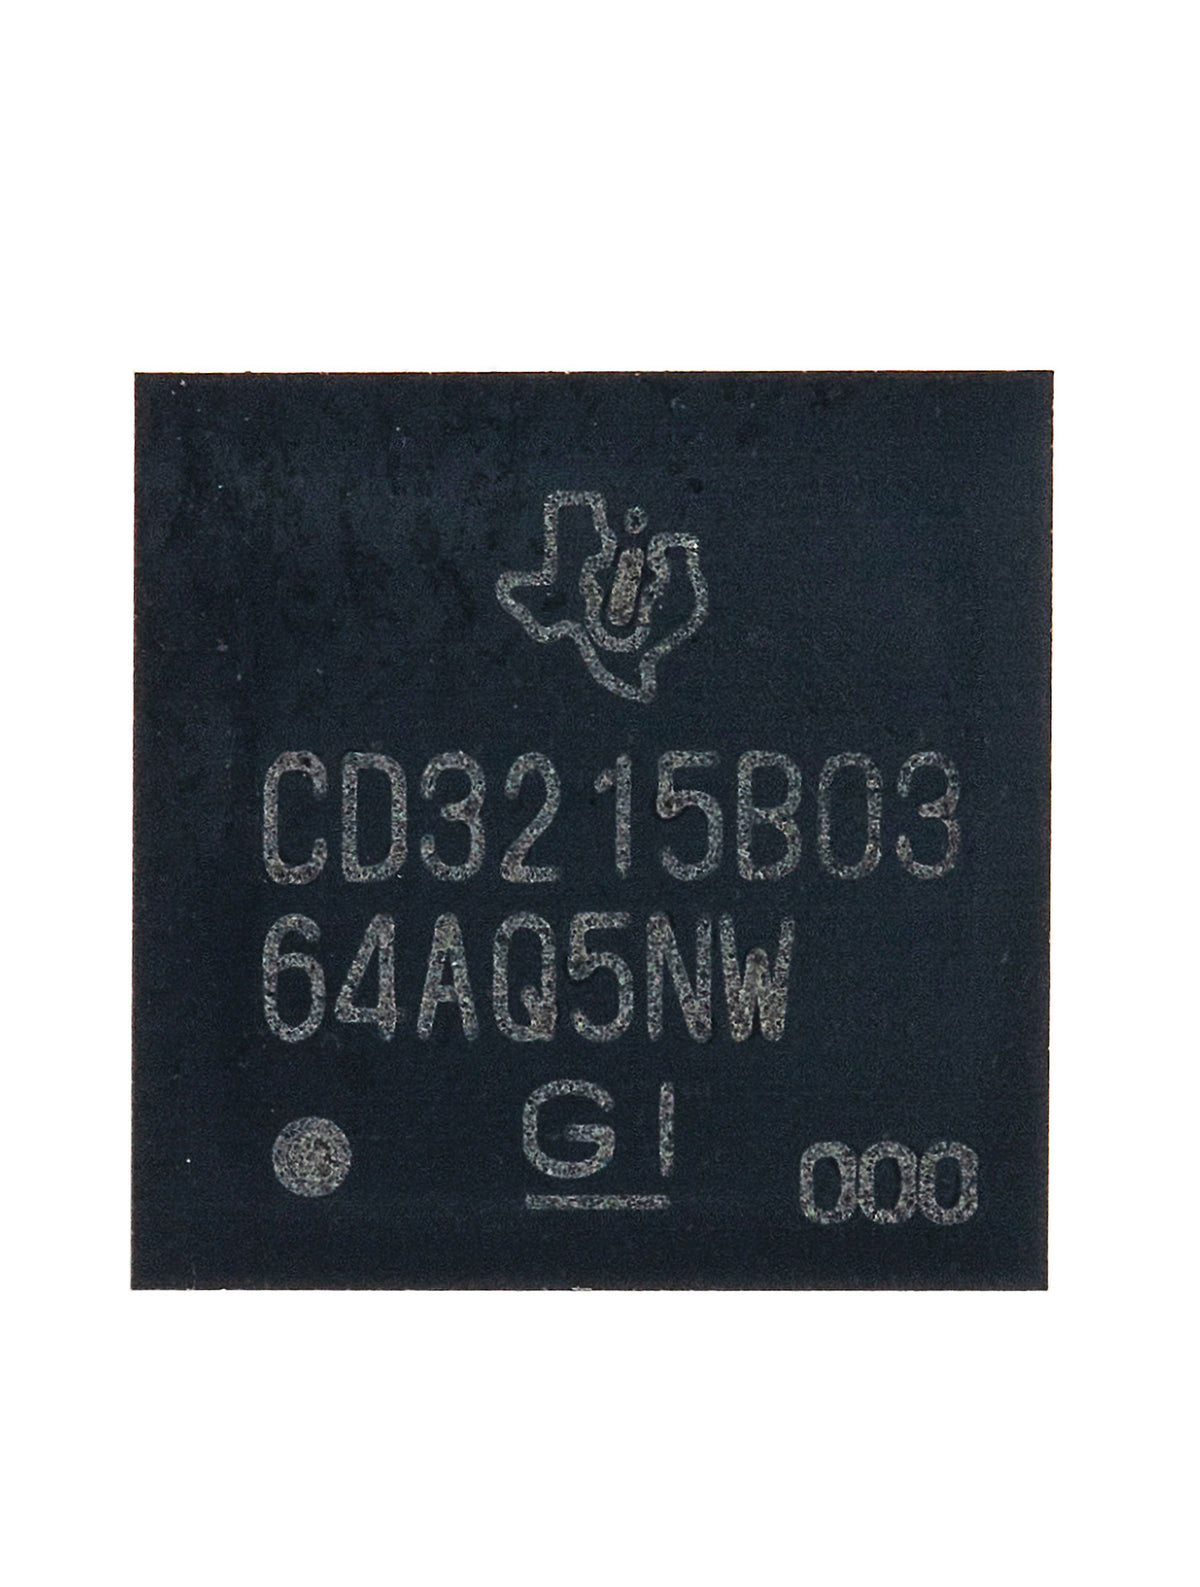 USB-C PORT CONTROLLER IC COMPATIBLE WITH MACBOOK 12" RETINA / PRO RETINA 13"A1534 / A1708 (EARLY 2016 / LATE 2016 / MID 2017) (CD3215B03 / CD3215B01 / CD3215A: U3100: BGA-96 PIN)